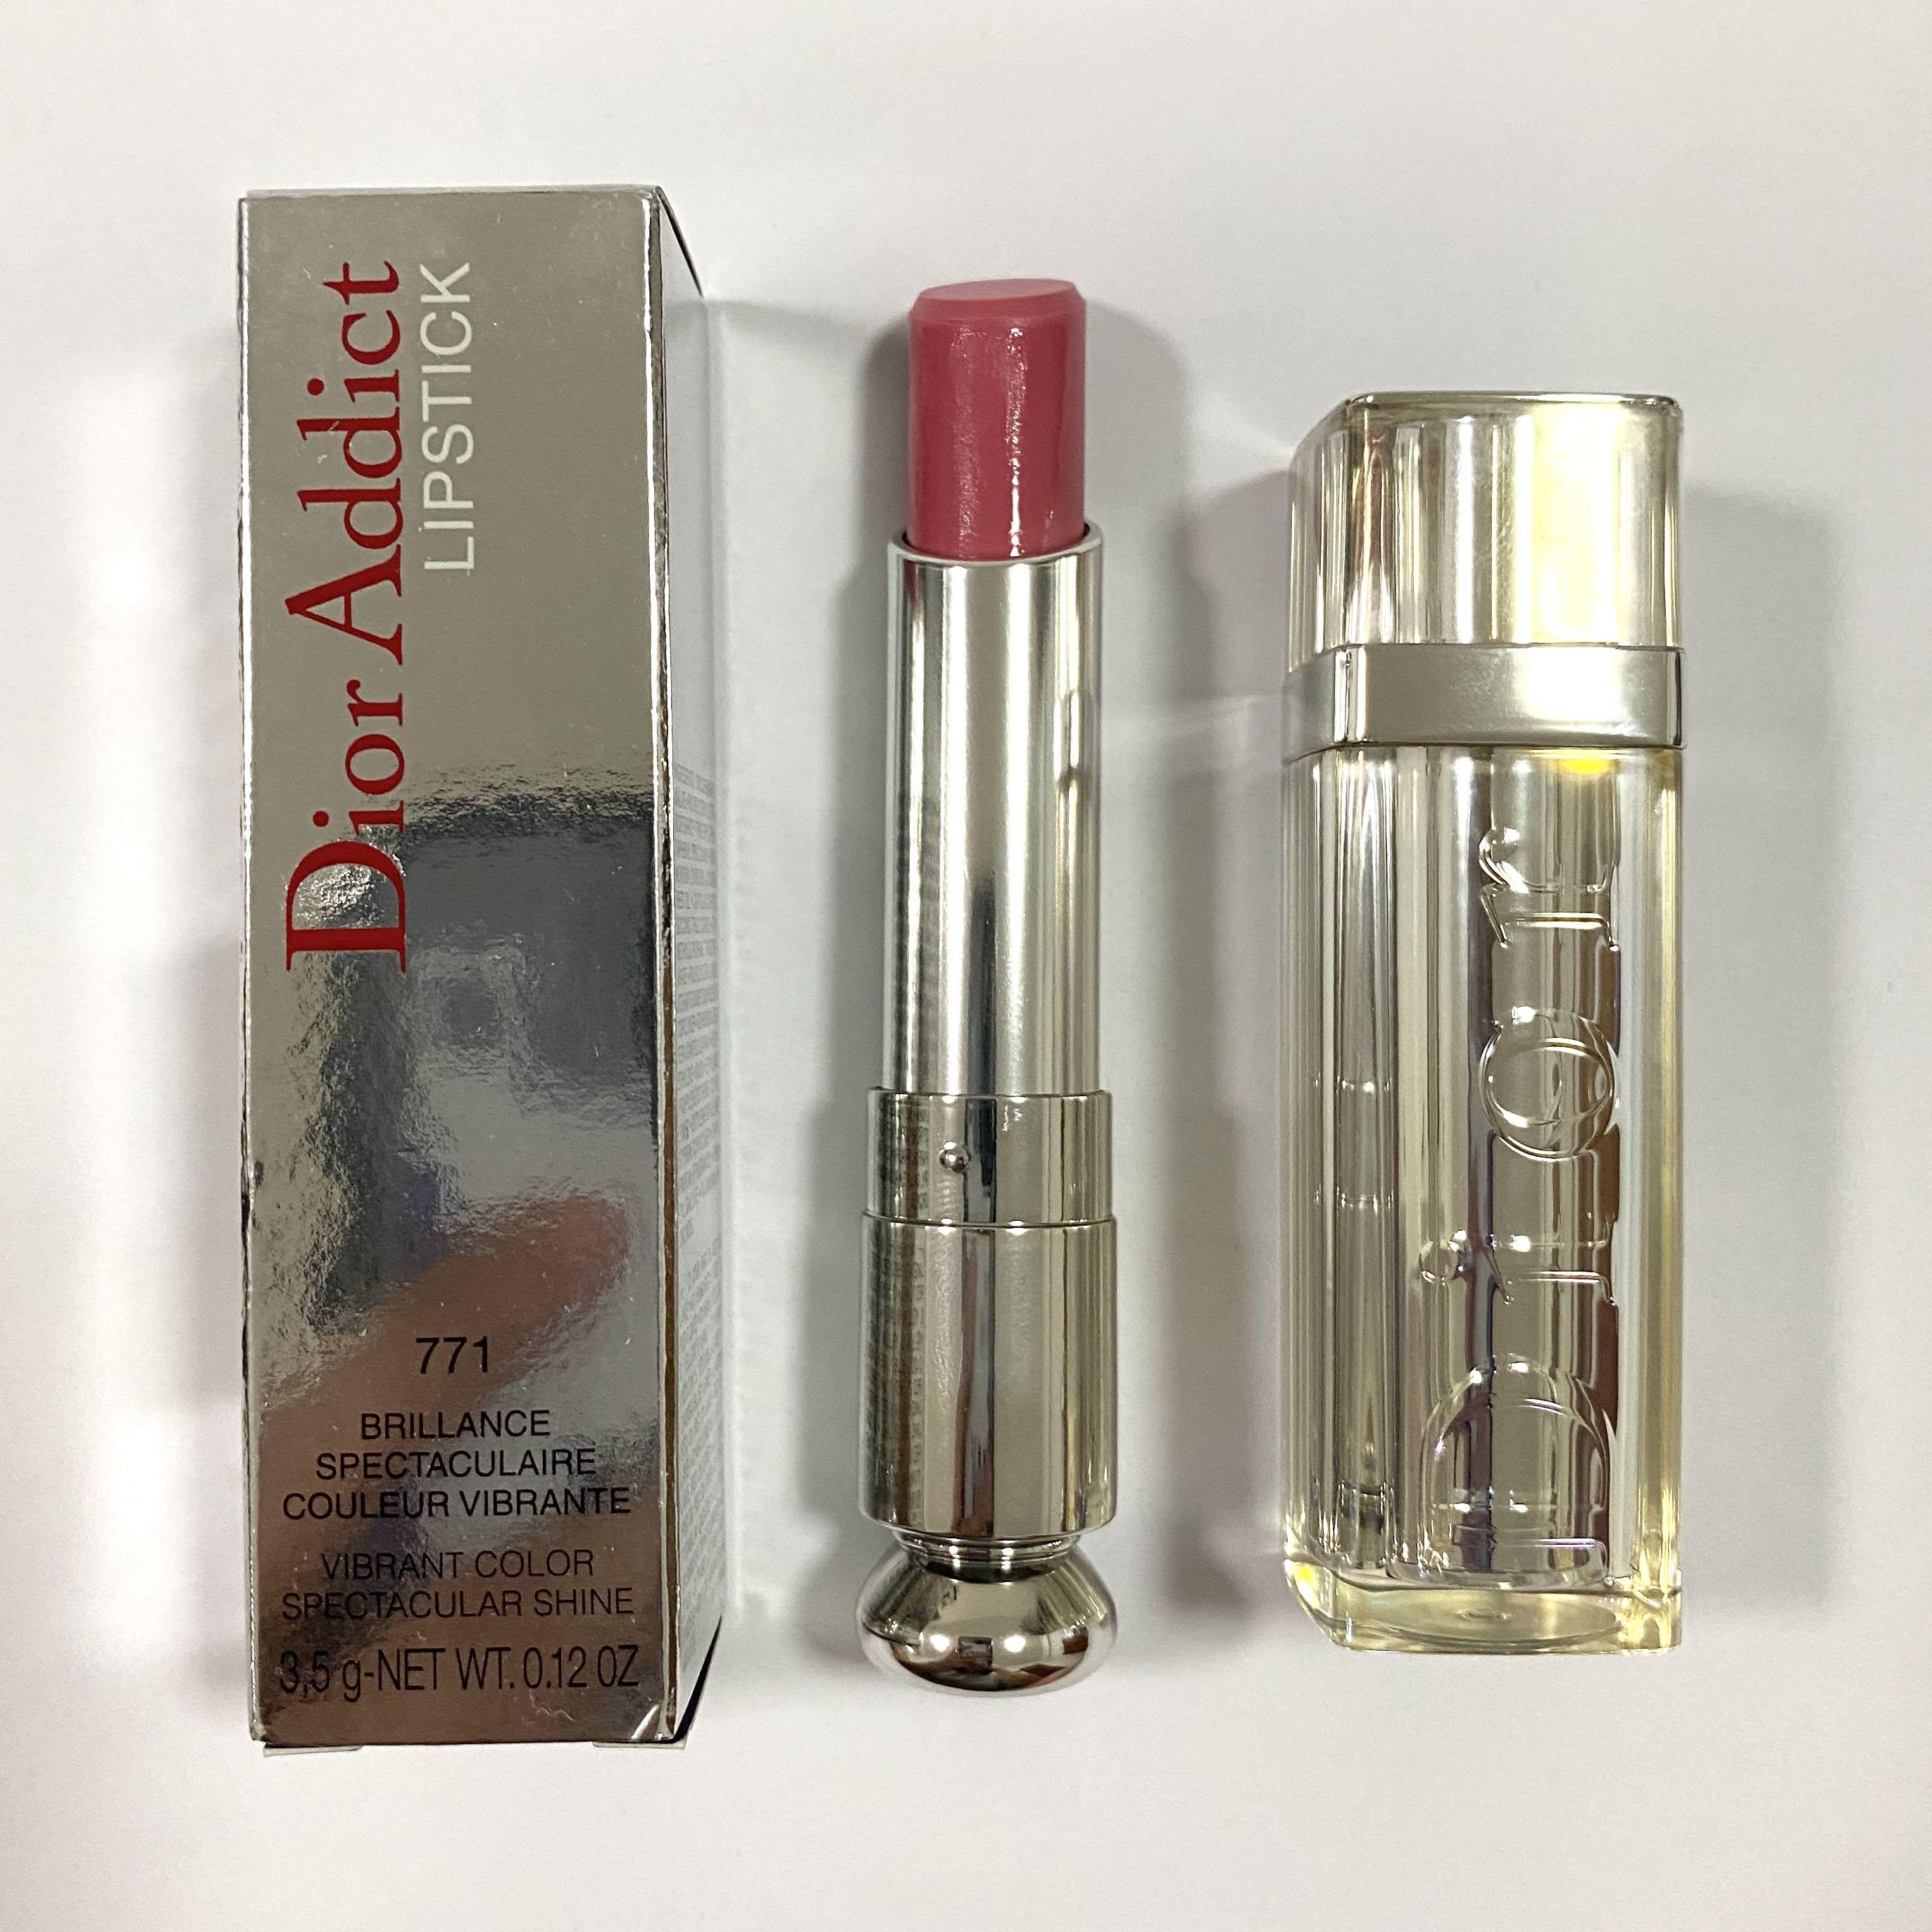 Christian Dior Addict Lipstick 771 